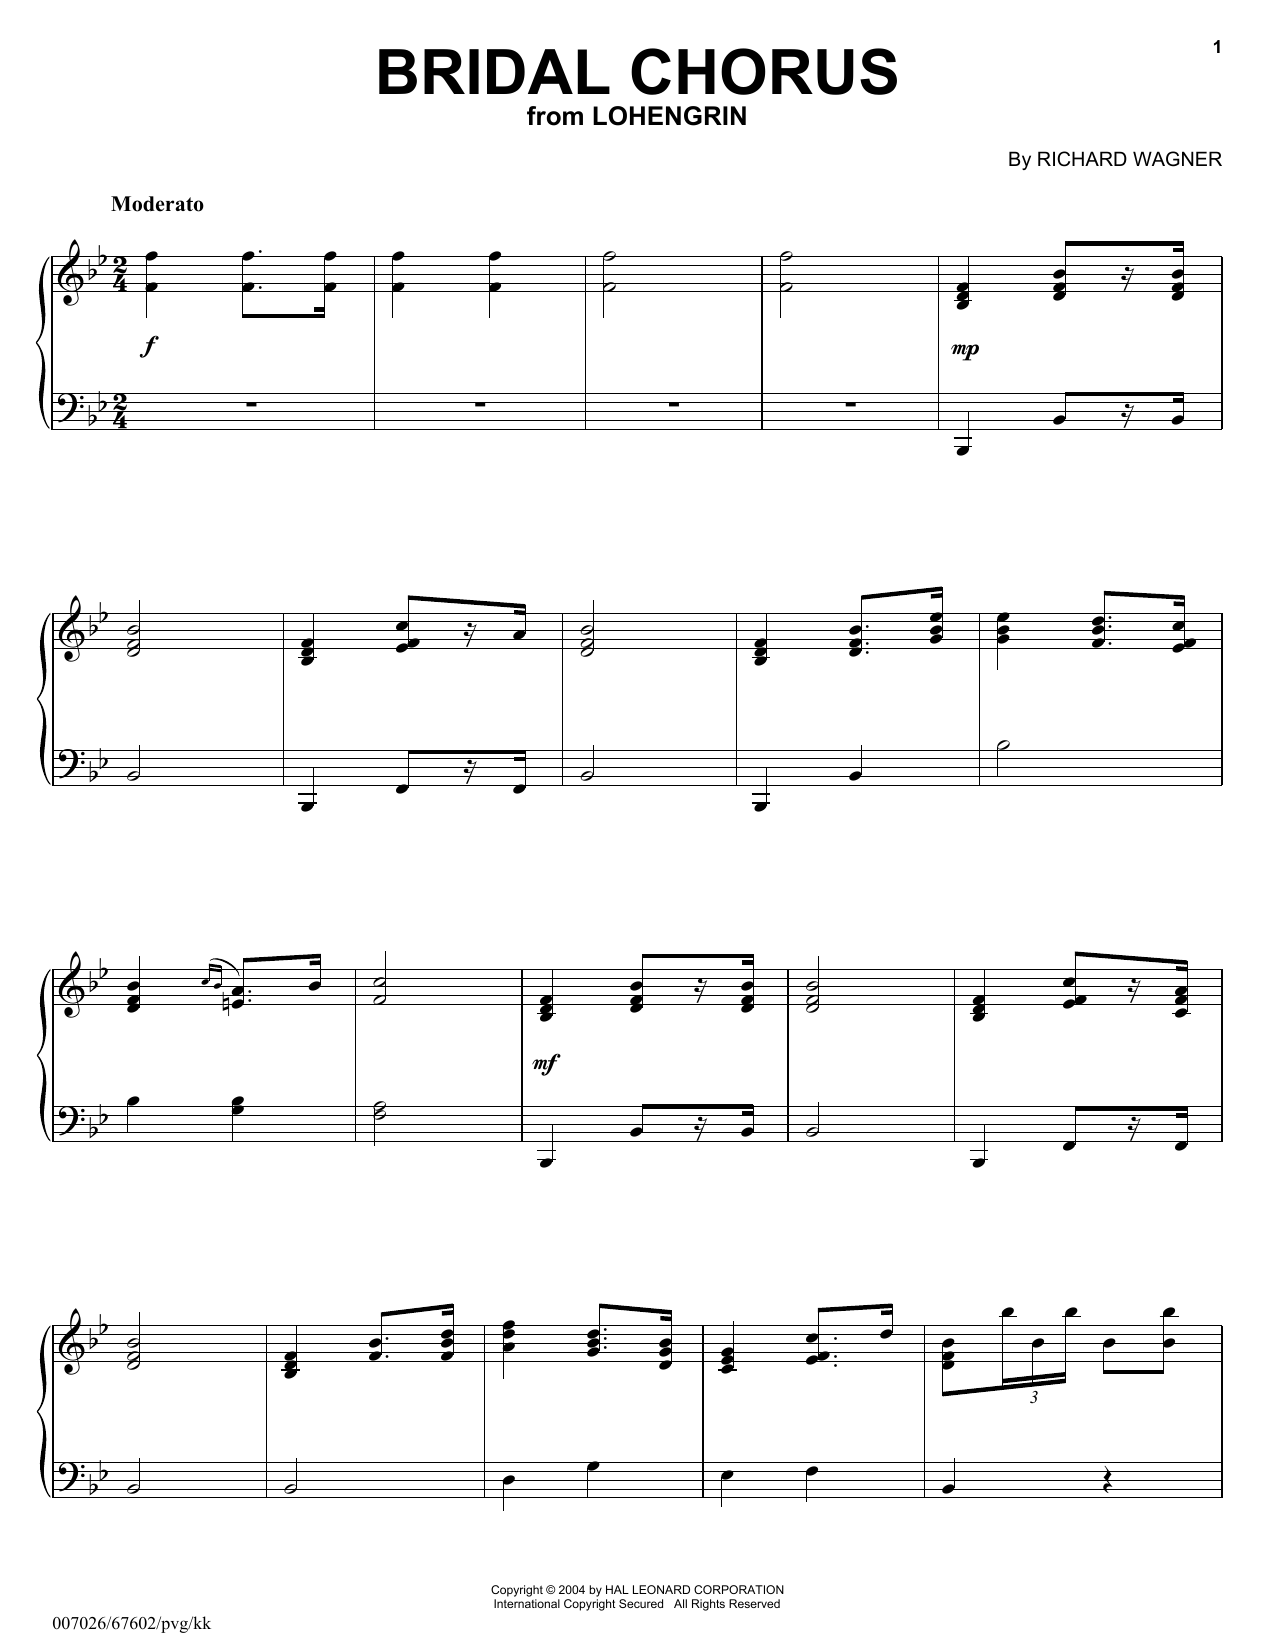 Richard Wagner Bridal Chorus Sheet Music Notes & Chords for Easy Piano - Download or Print PDF